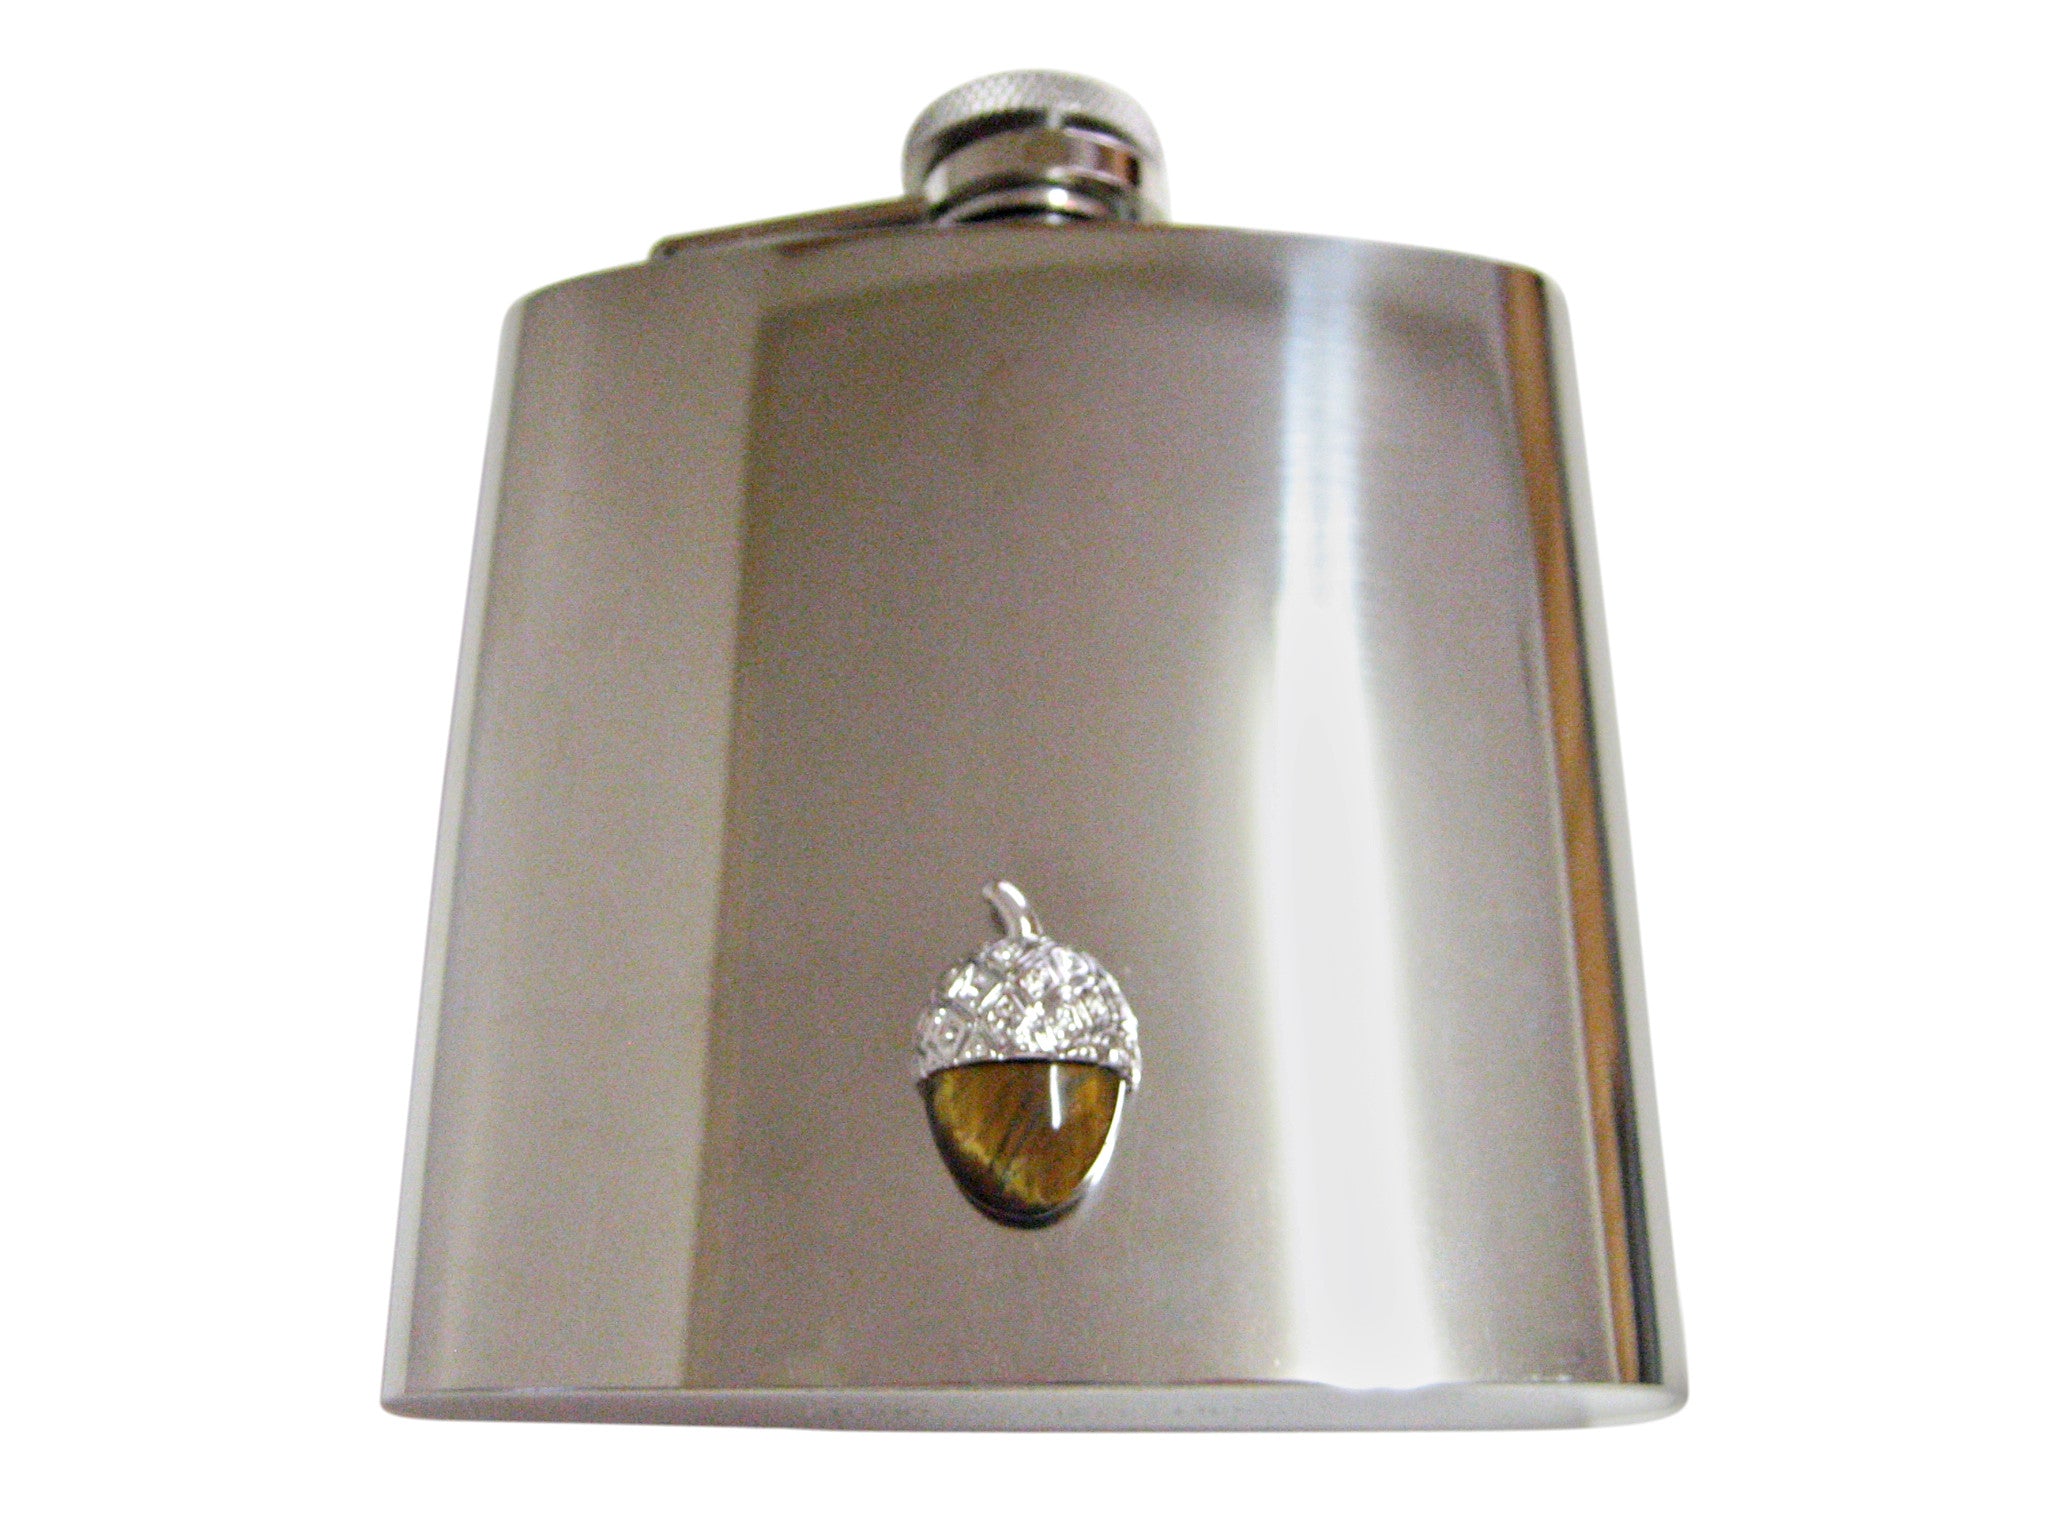 Shiny Acorn 6 Oz. Stainless Steel Flask